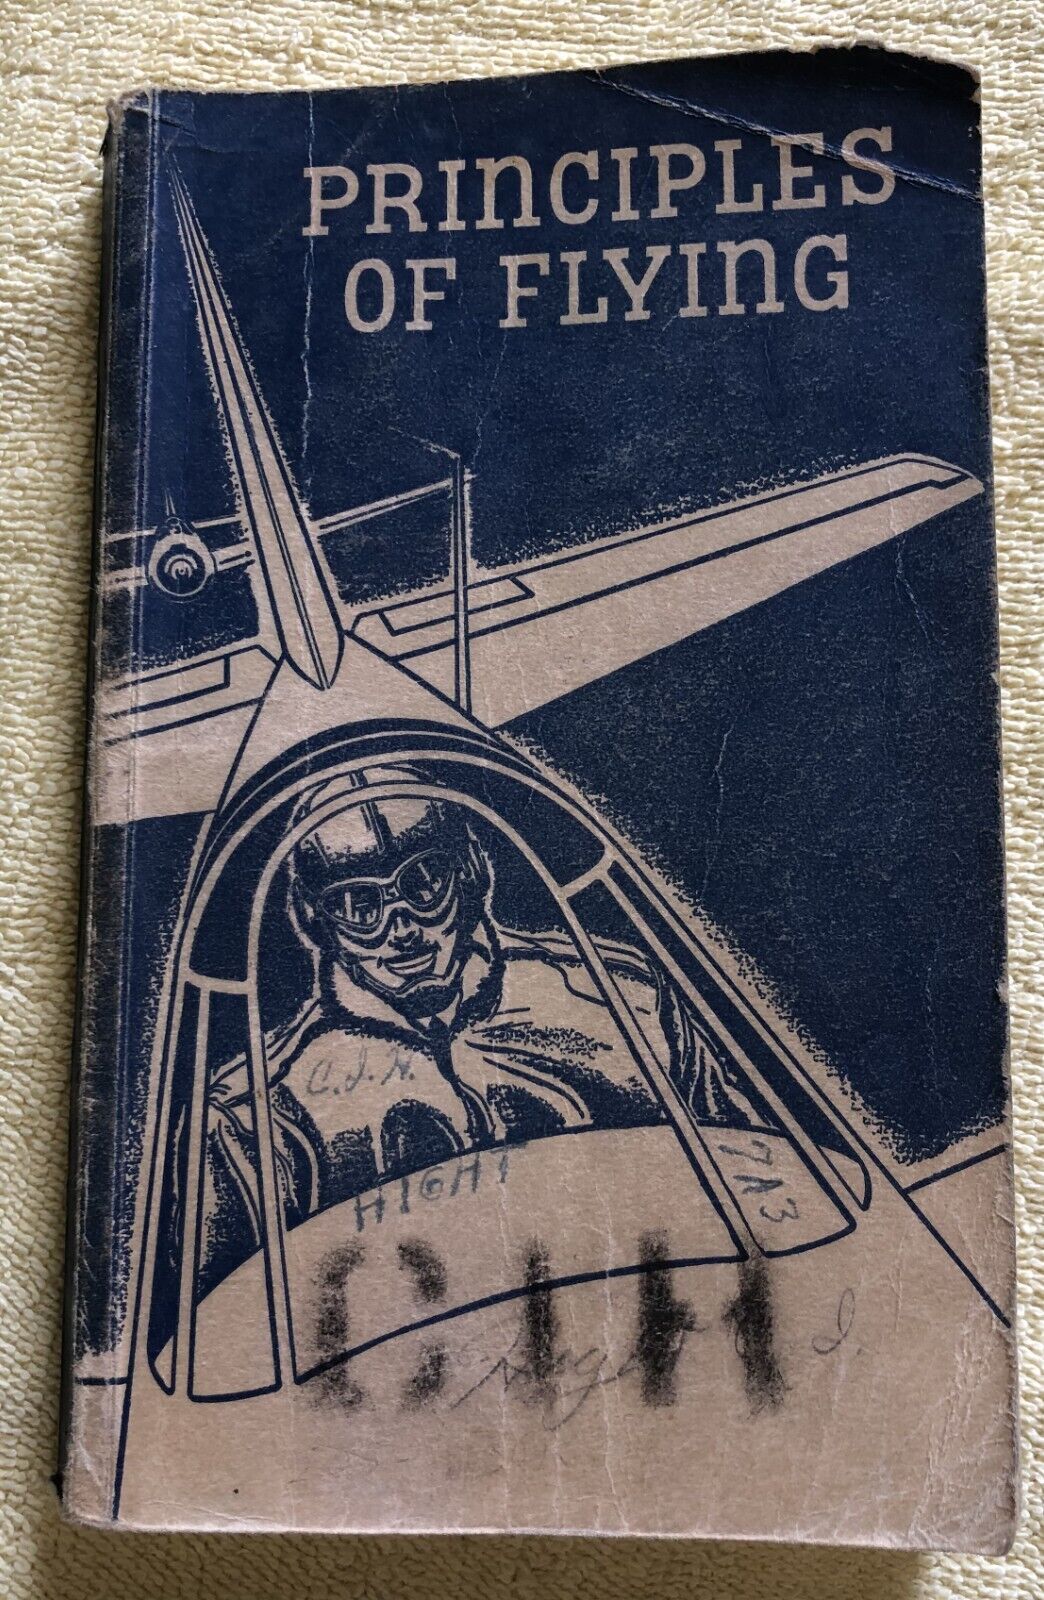 Principles of Flying U.S. Navy 1943